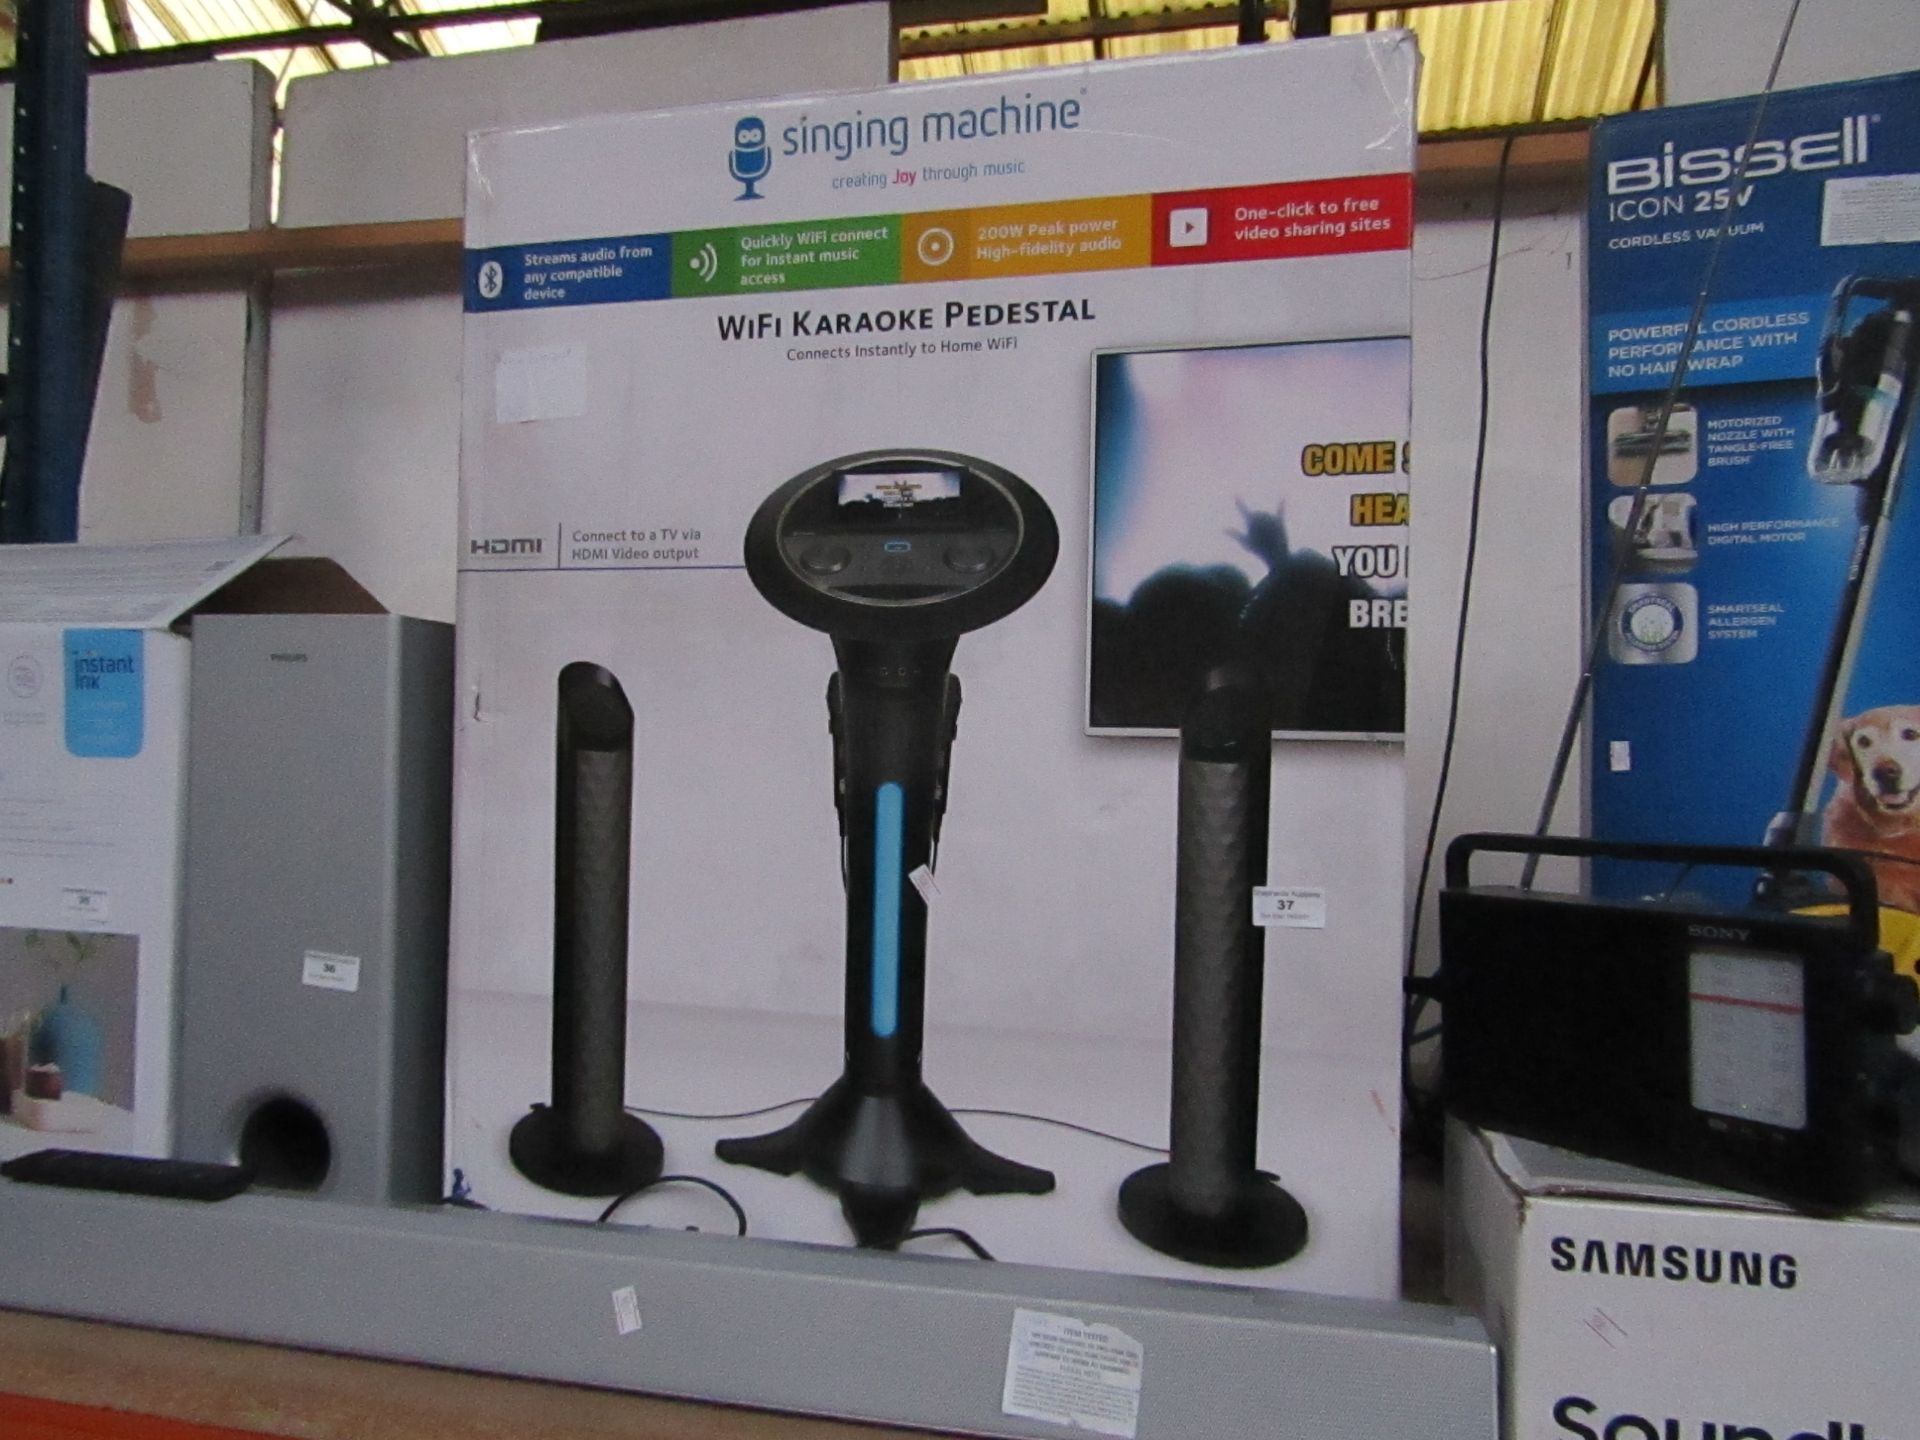 Singing Machine WiFi karaoke pedestal, appears to be new / unused (no guranatee), boxed. RRP